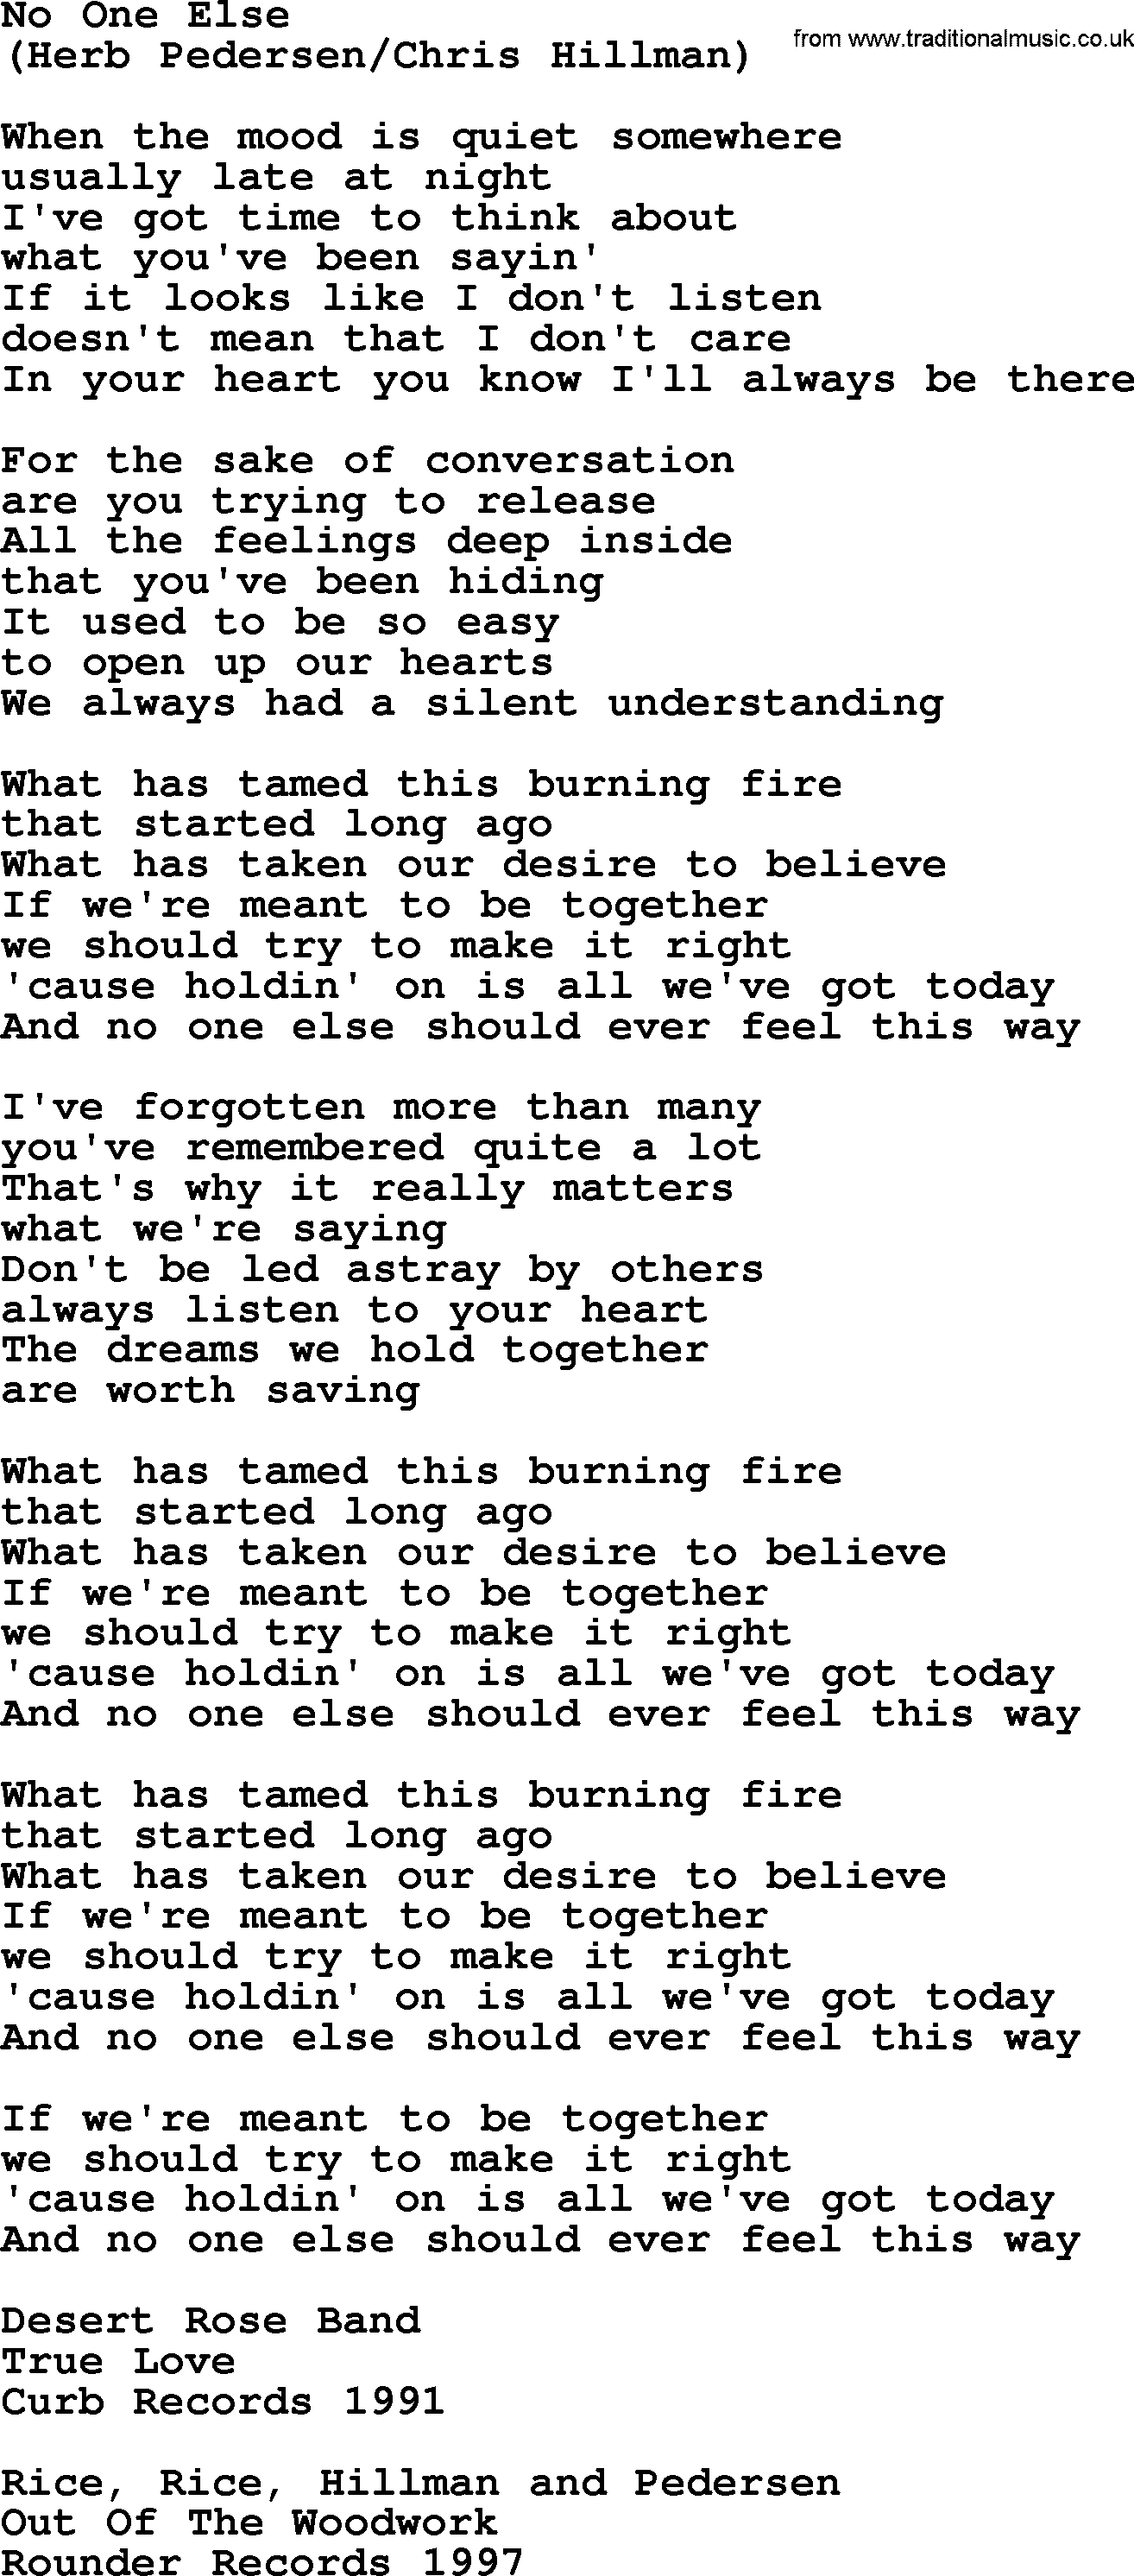 The Byrds song No One Else, lyrics